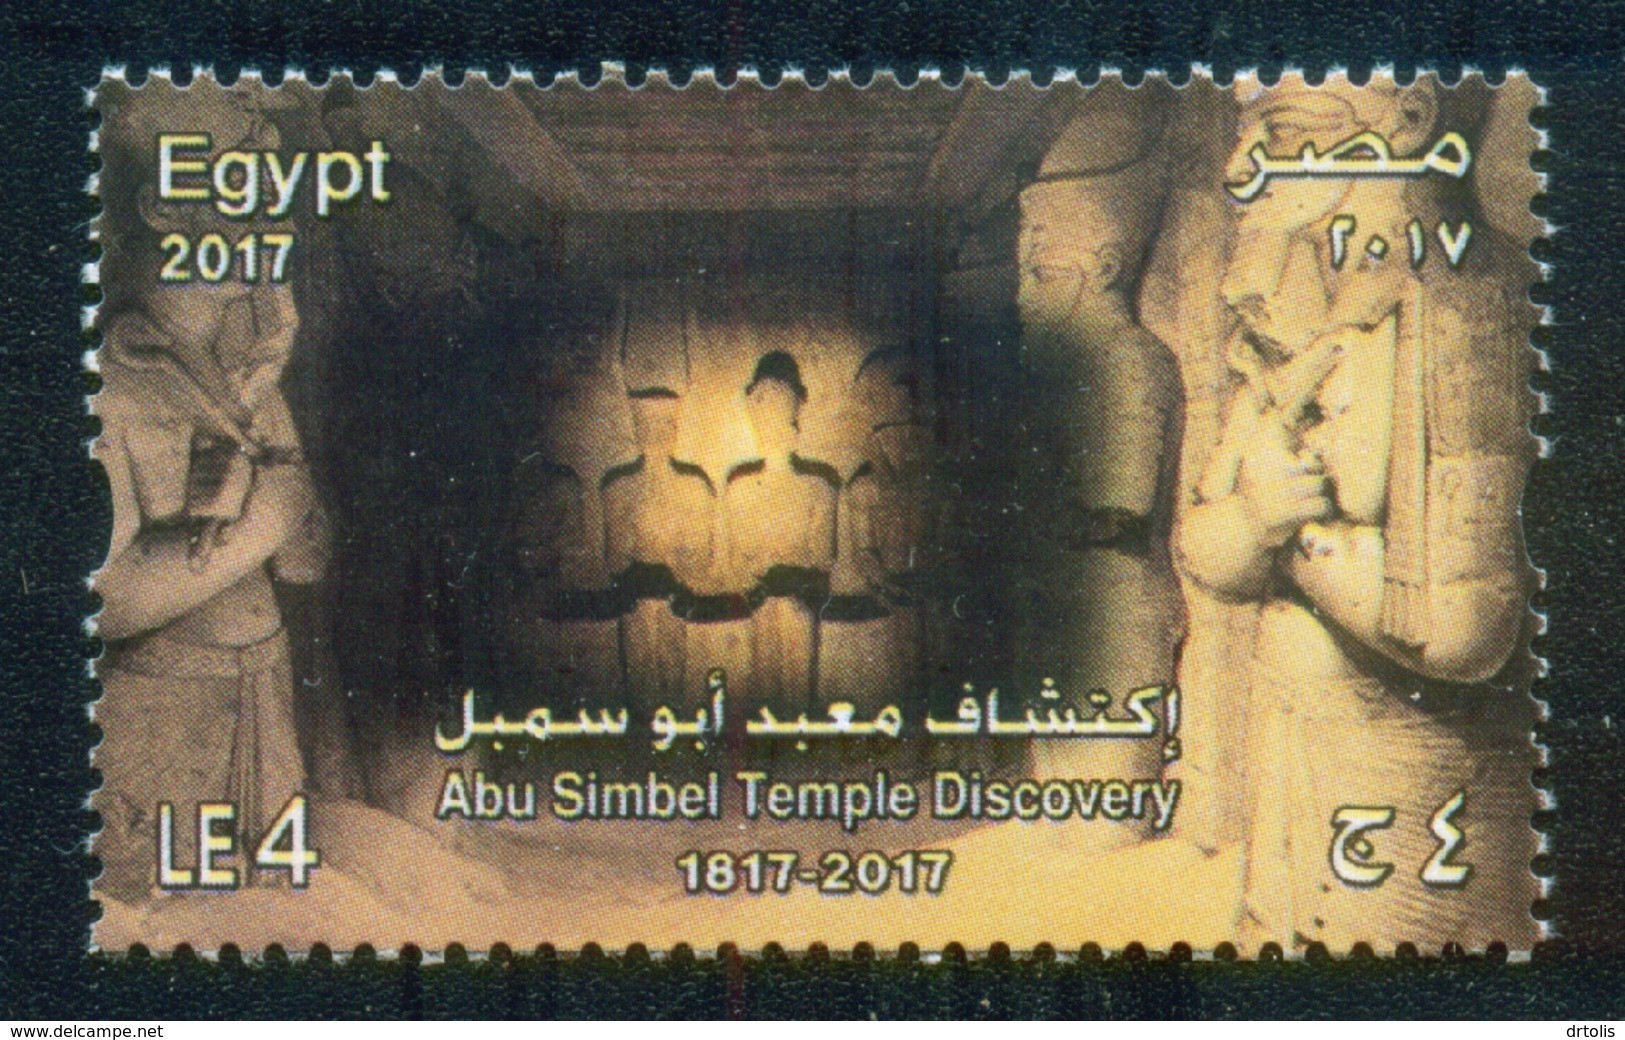 EGYPT / 2017 / SUN VERTICALITY / ABU SIMBEL TEMPLE / RAMESES II / ARCHEOLOGY / MNH - Ungebraucht